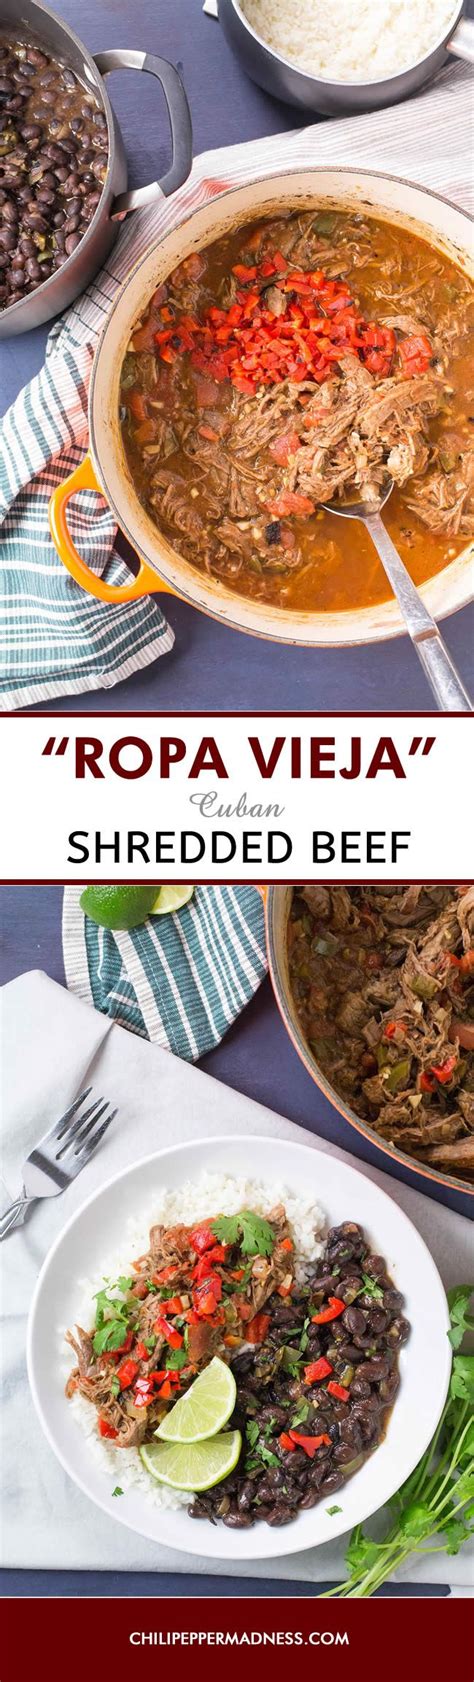 Ropa Vieja Cuban Shredded Beef A National Cuban Recipe Ropa Vieja